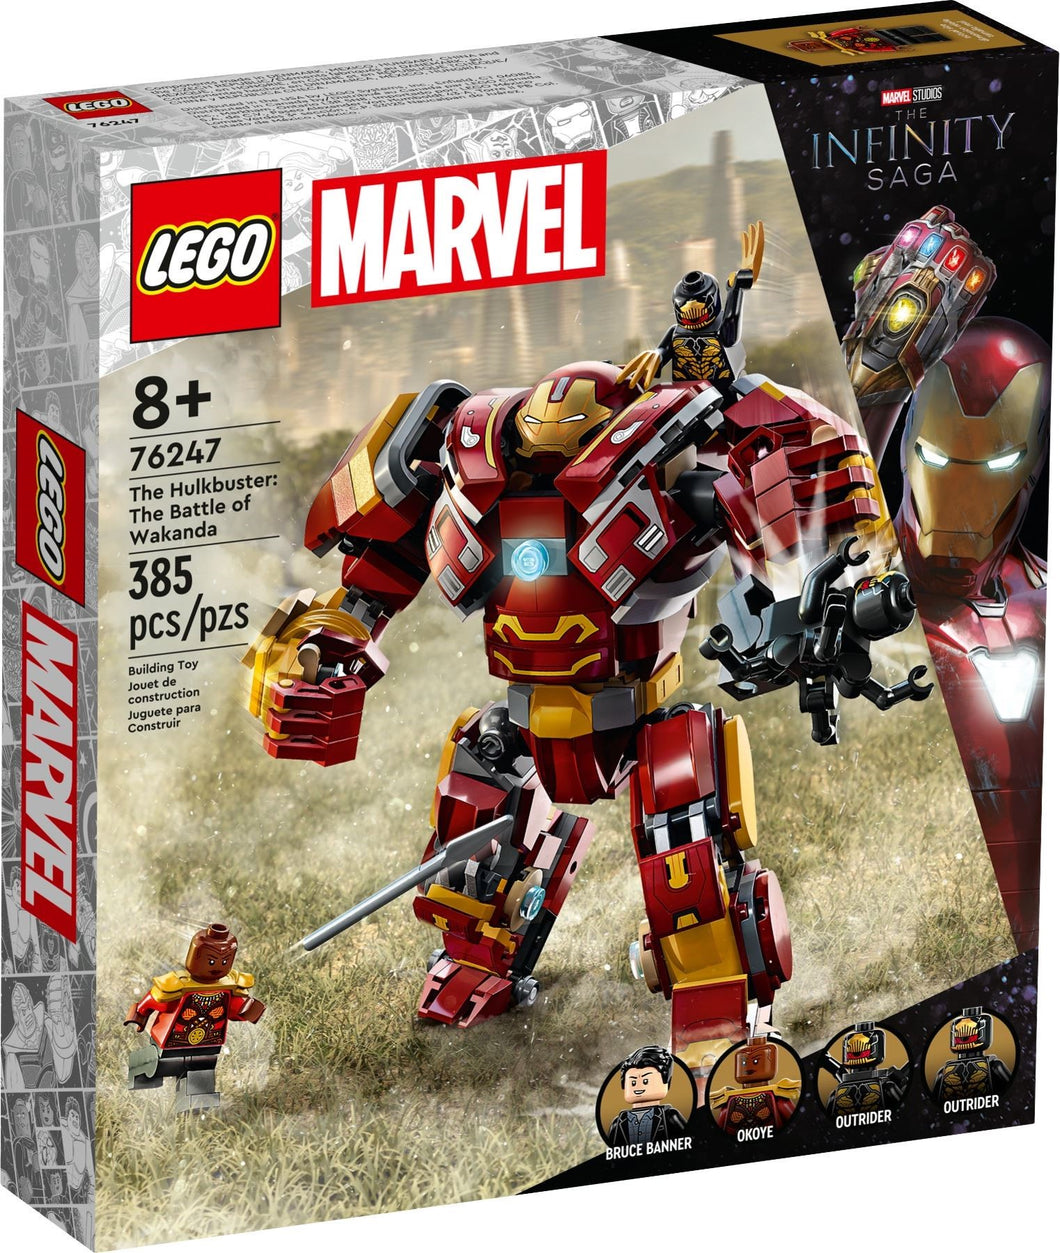 LEGO Marvel 76247 The Hulkbuster: The Battle of Wakanda - Brick